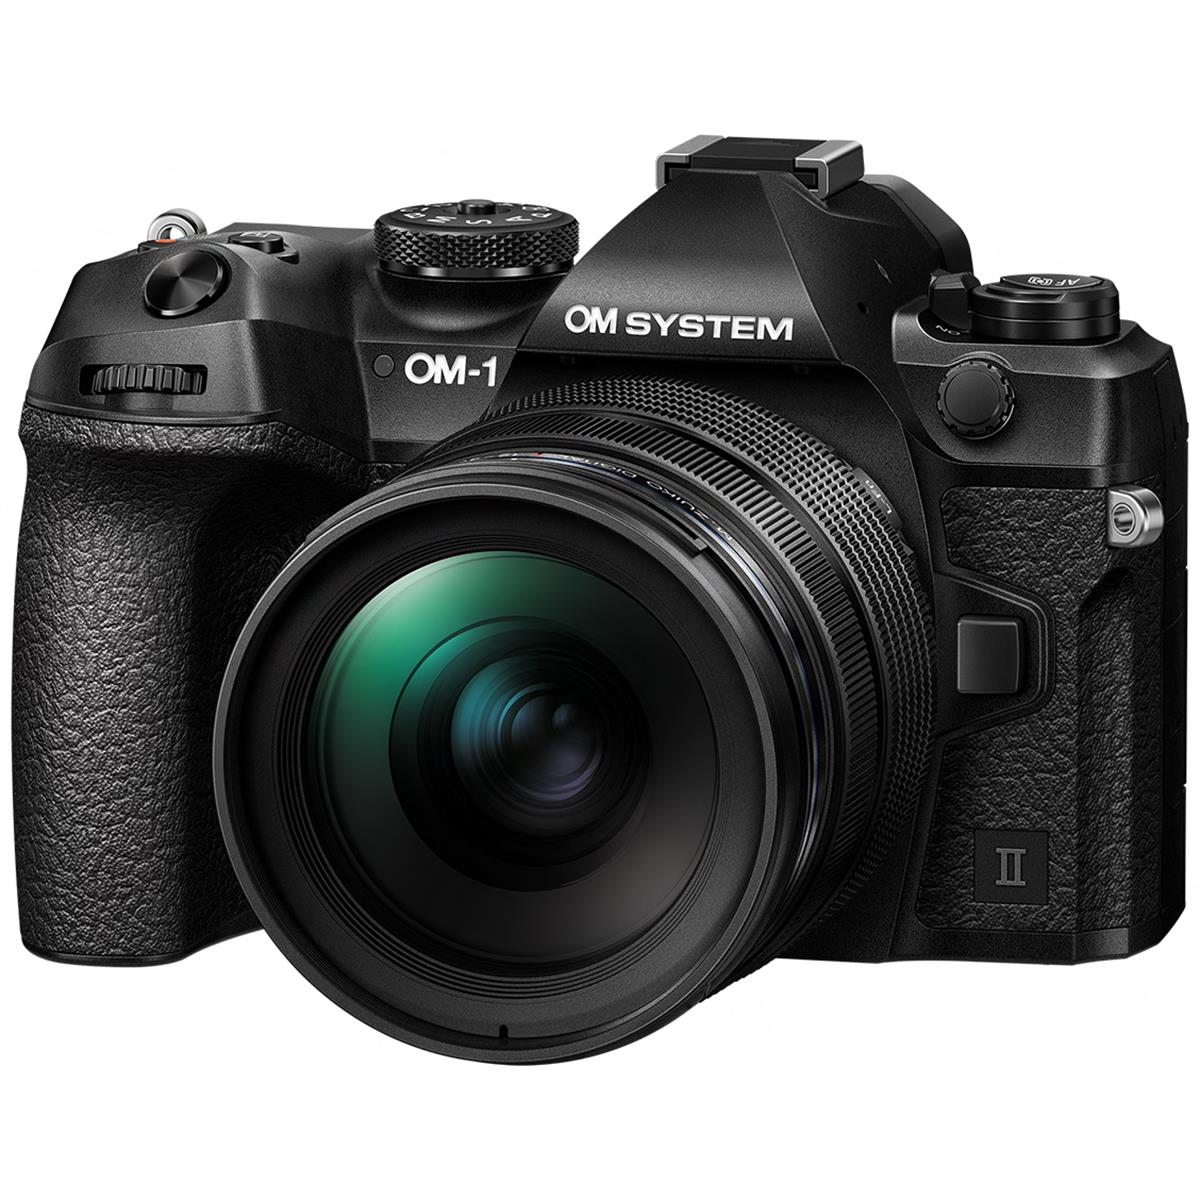 Image of OM SYSTEM OM-1 Mark II Mirrorless Camera with M.Zuiko ED 12-40mm f/2.8 Lens Kit